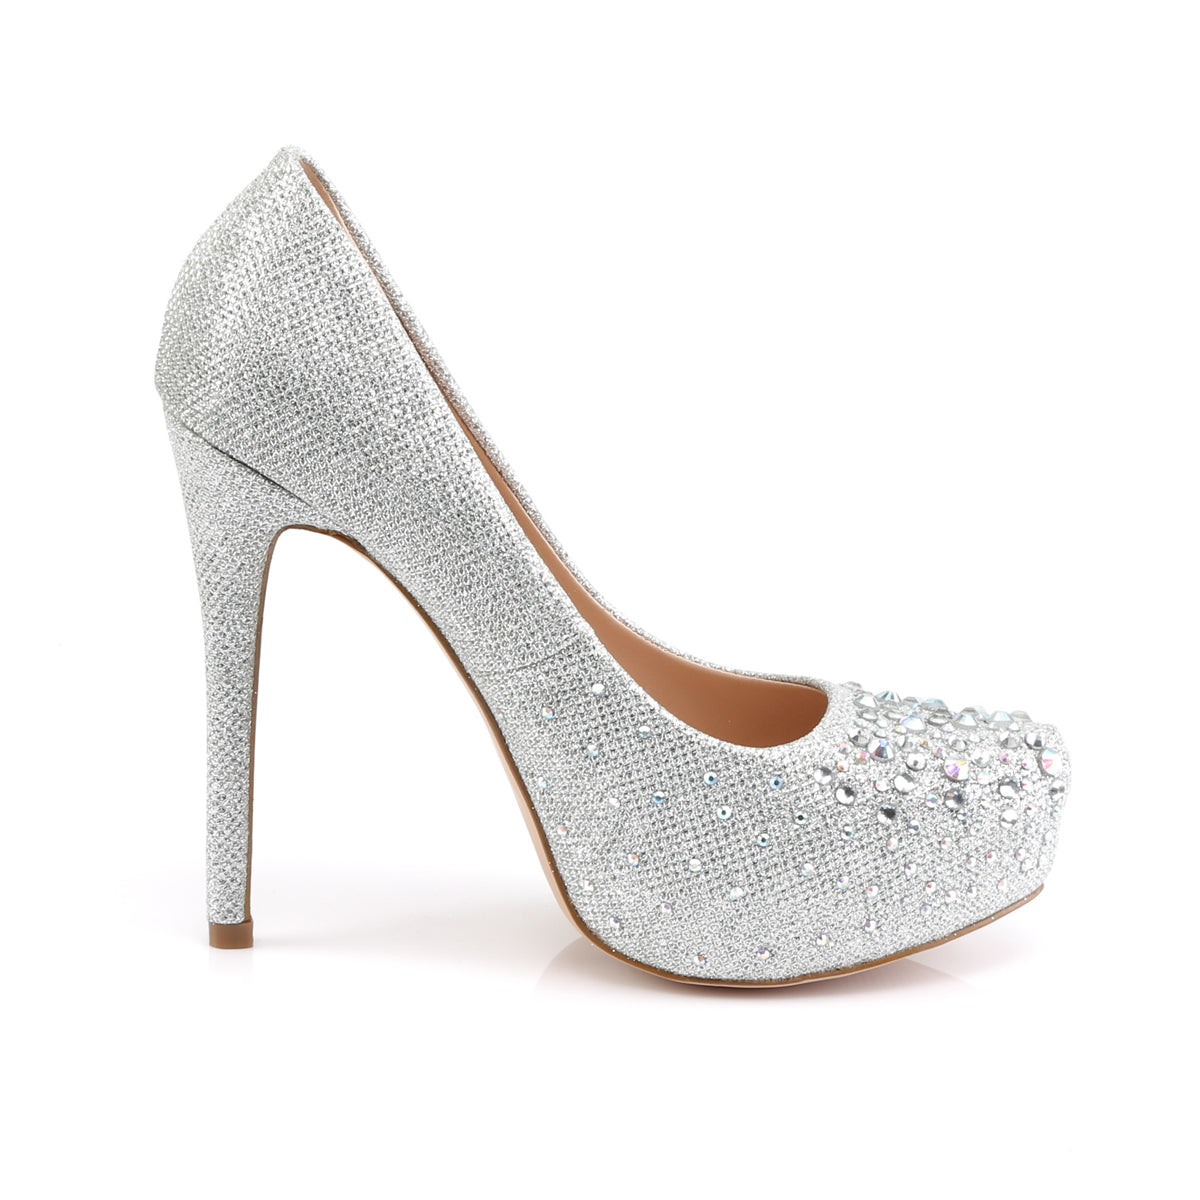 DESTINY-06R Fabulicious 5 Inch Heel Silver Glitter Sexy Shoe-Fabulicious- Sexy Shoes Fetish Heels